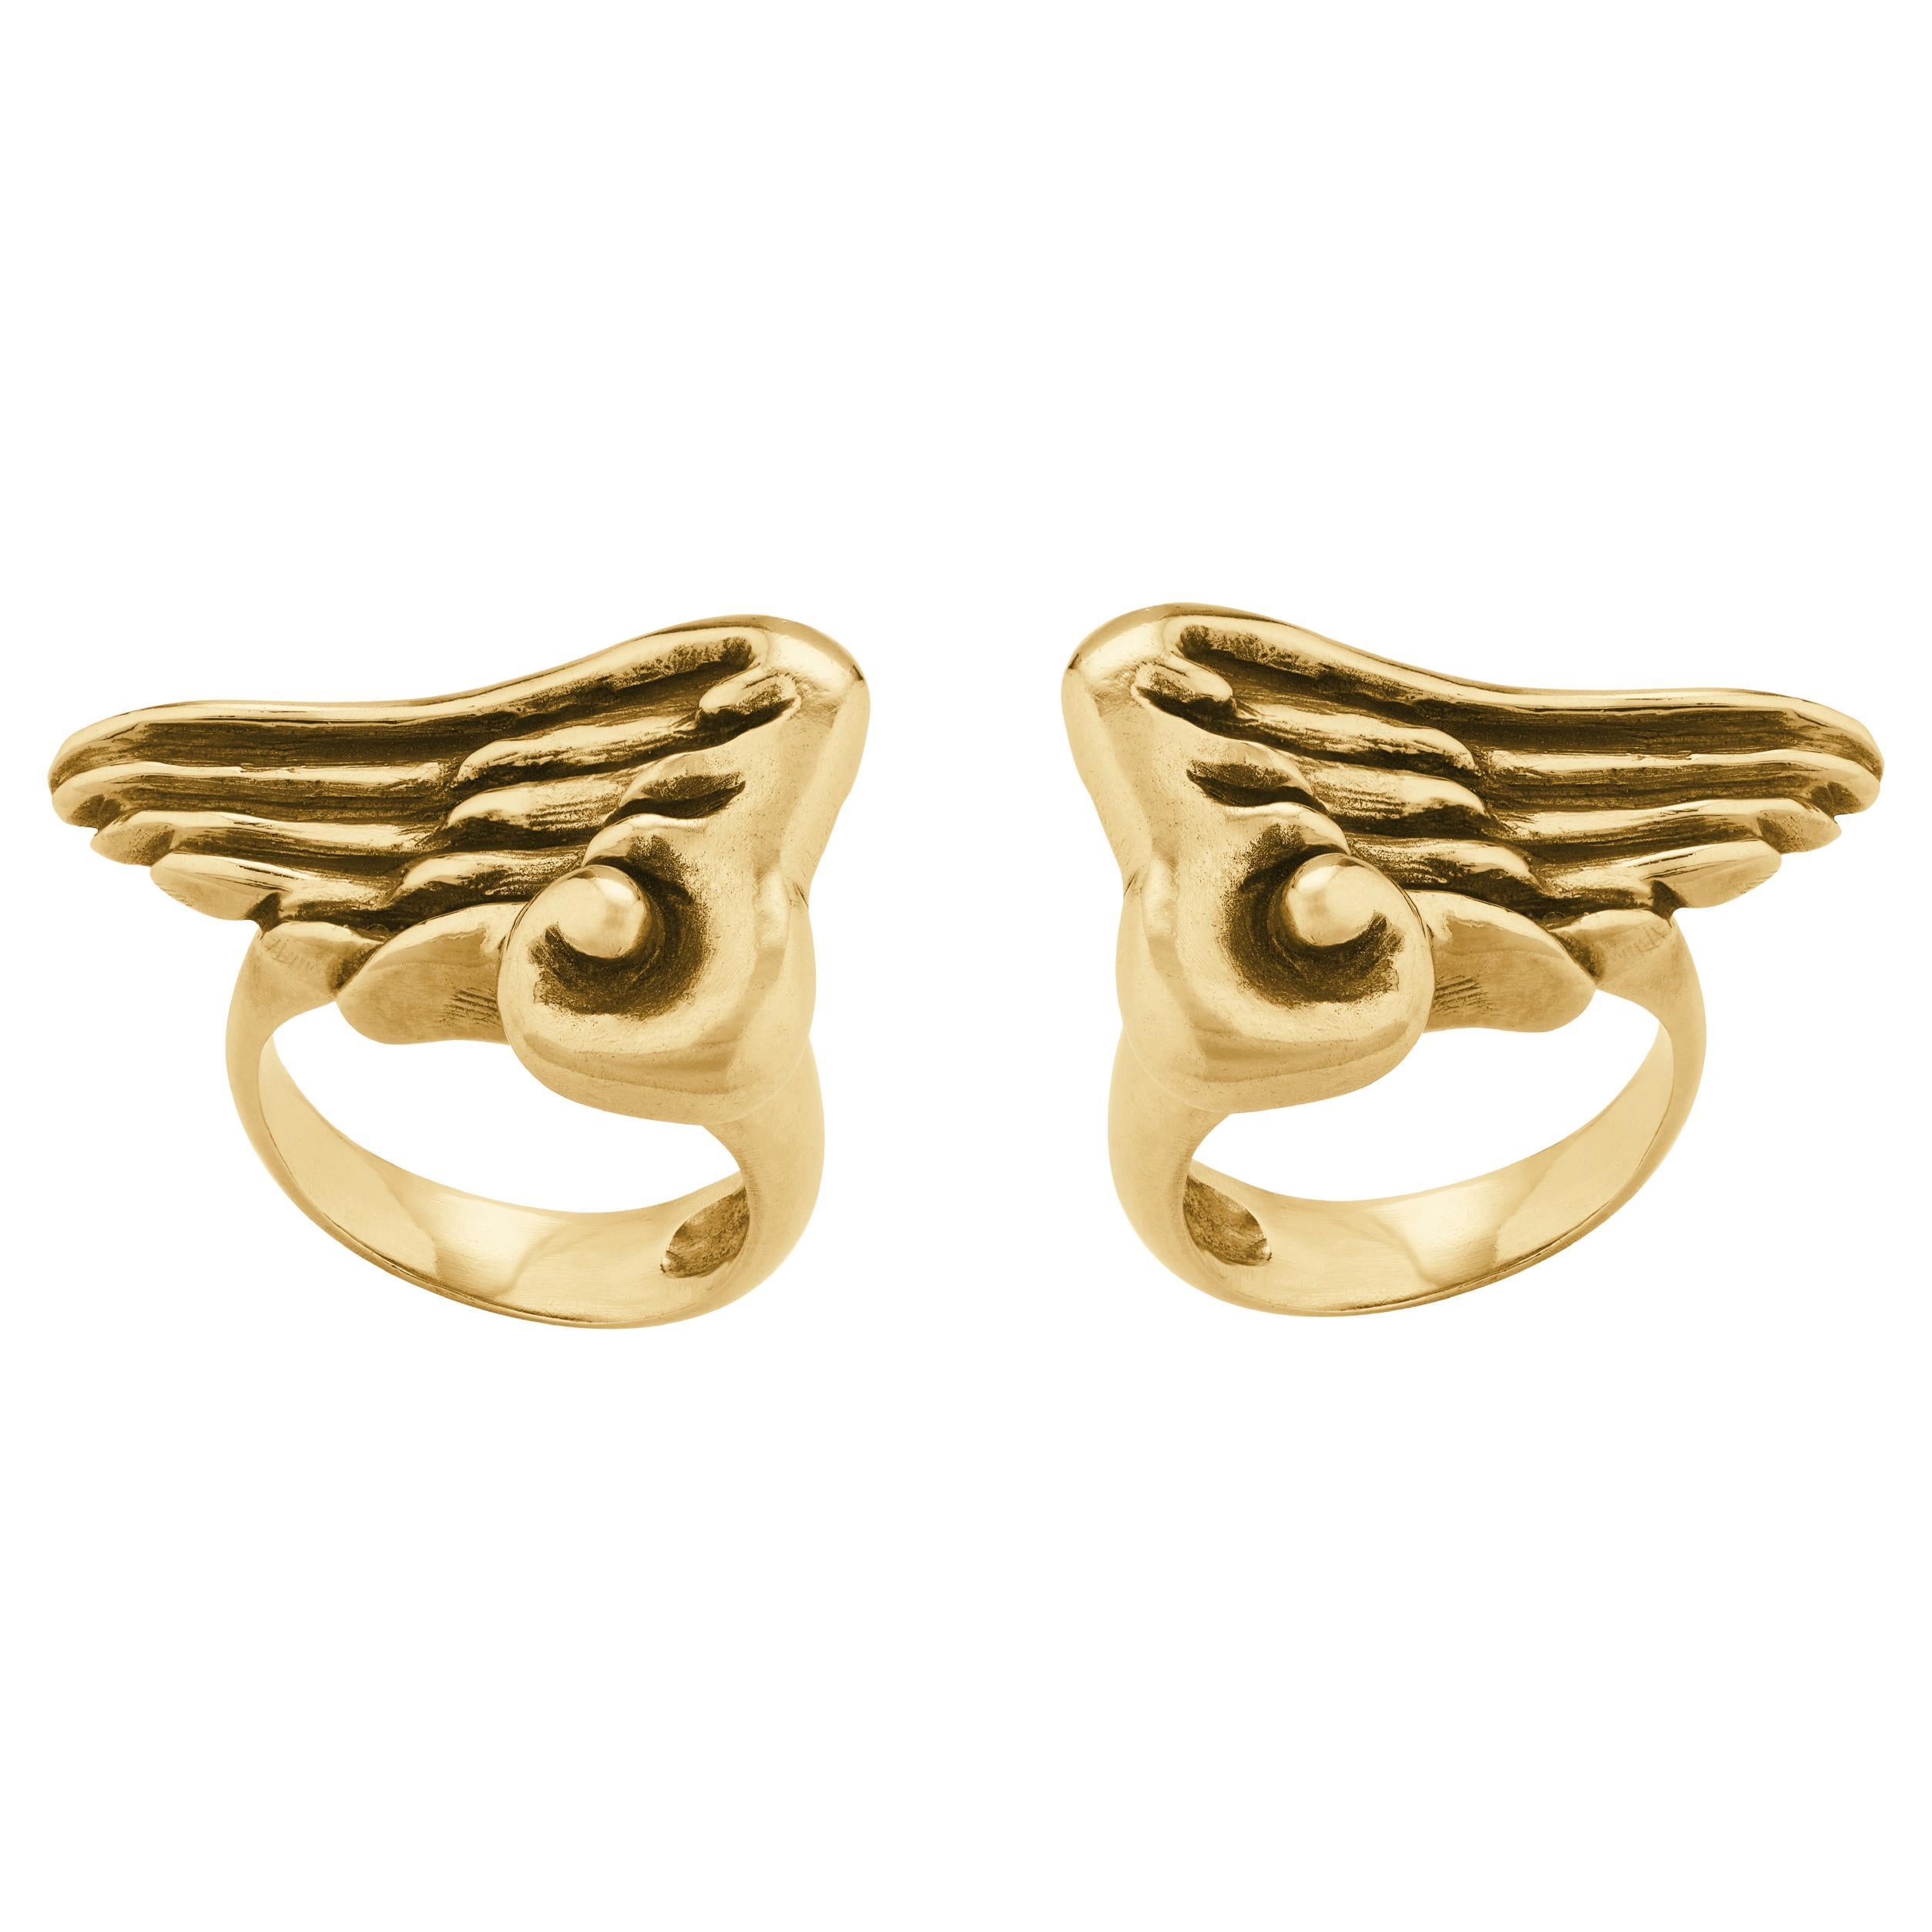 Betony Vernon "Wing Rings Set" Rings 18 Karat Gold in Stock